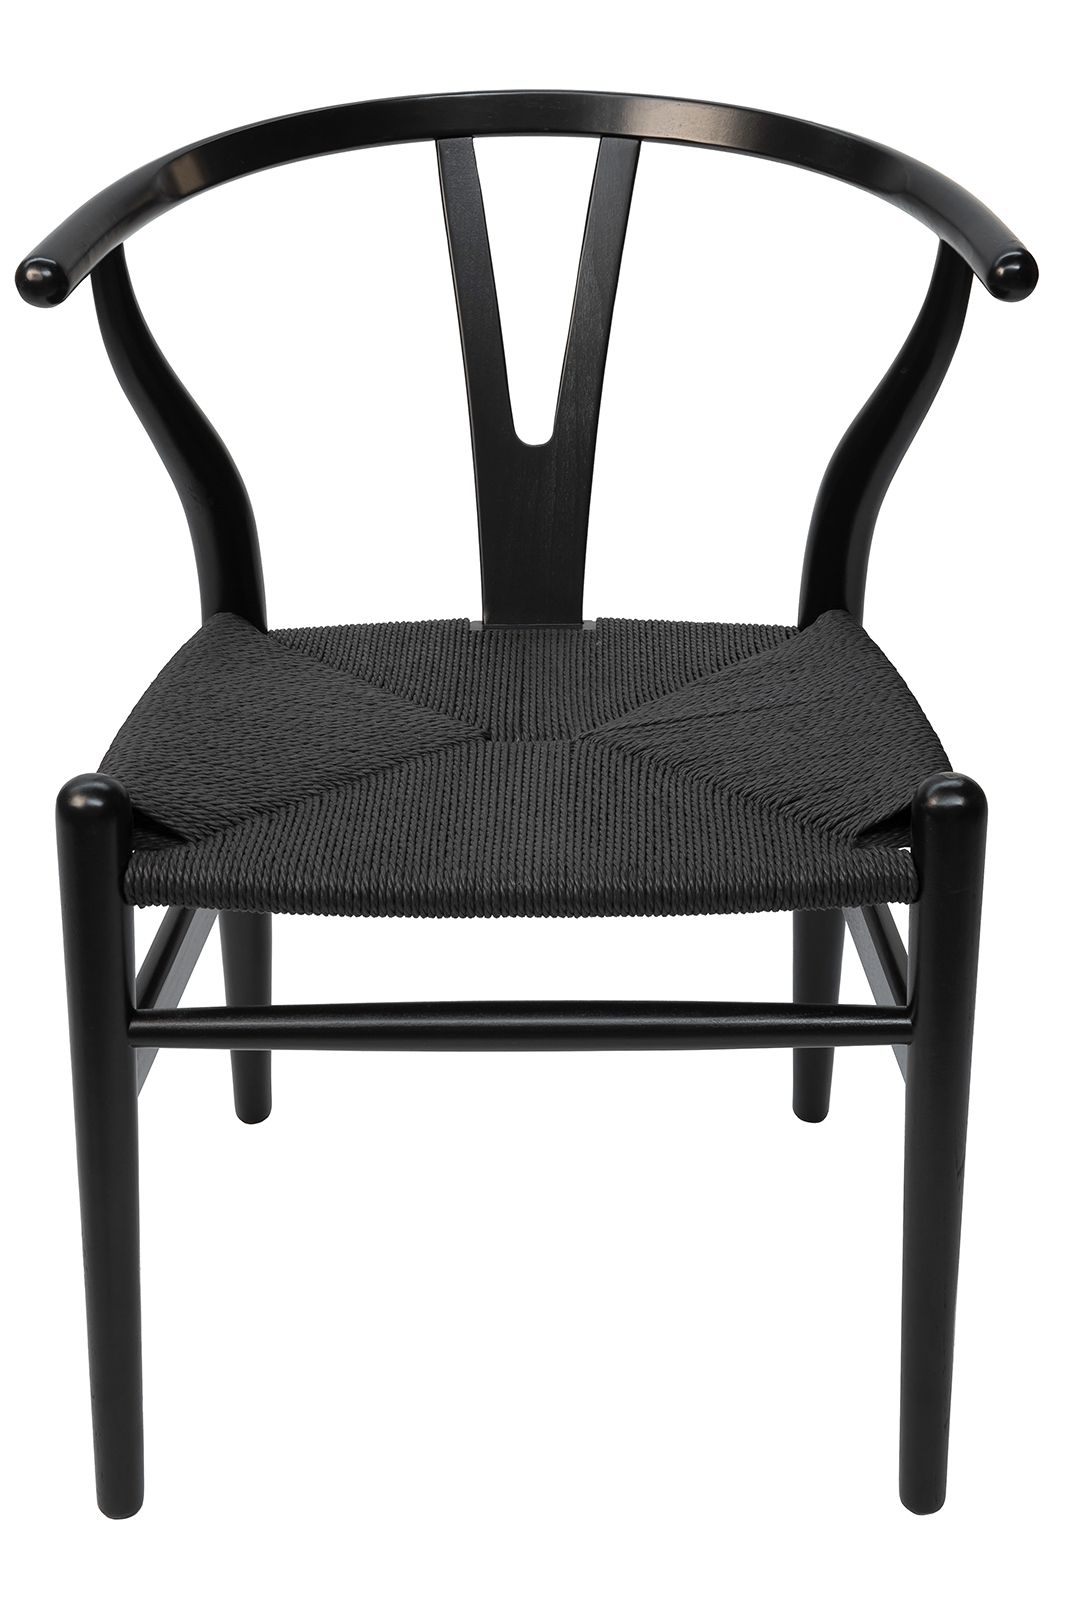 Replica Hans Wegner Wishbone Chair | Black Frame & Black Seat